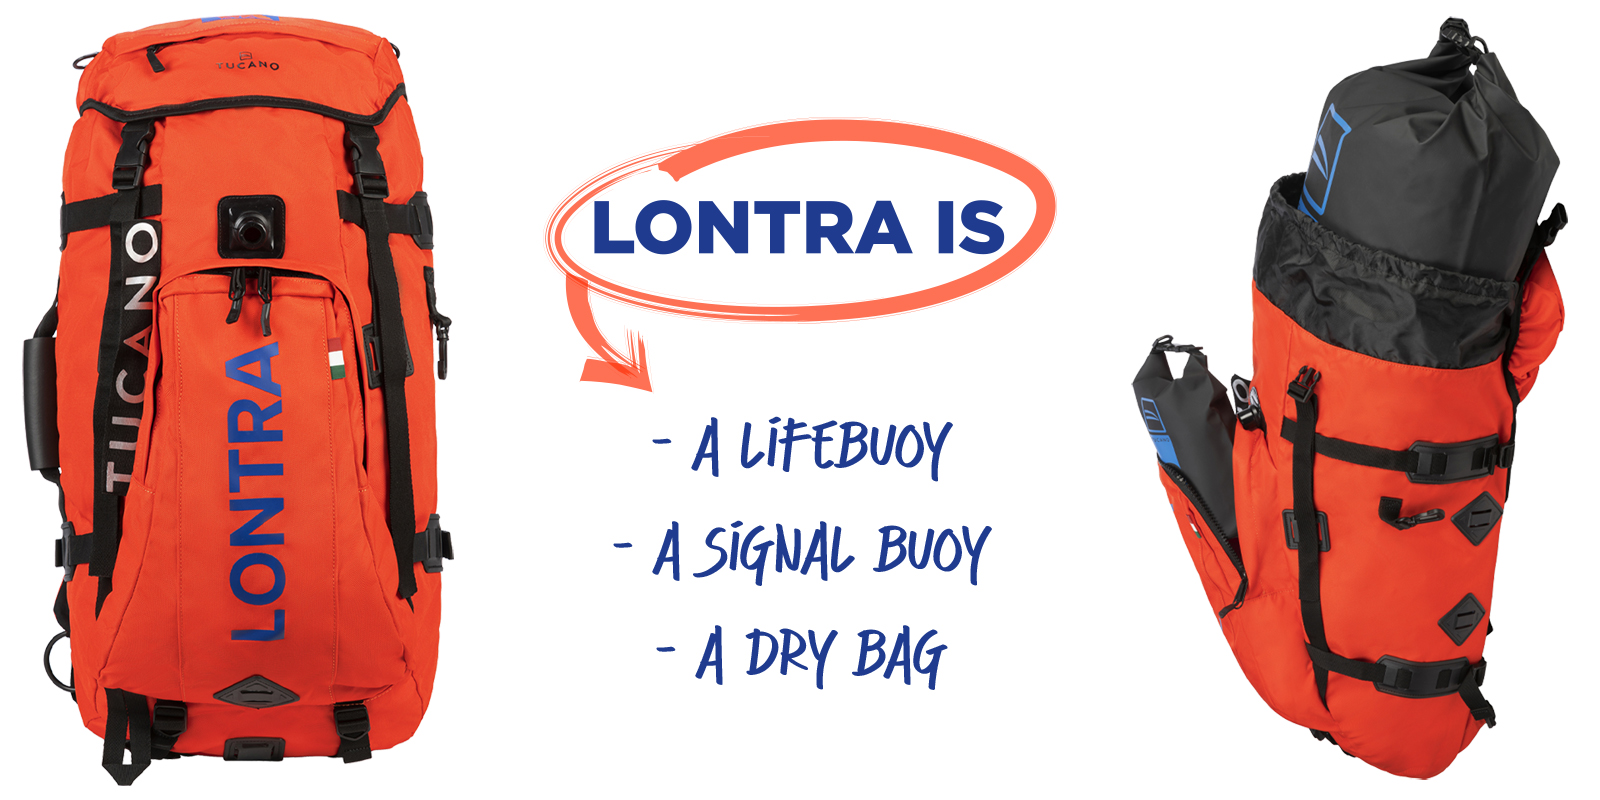 Lontra_lifebuoy_signal_buoy_dry_bag